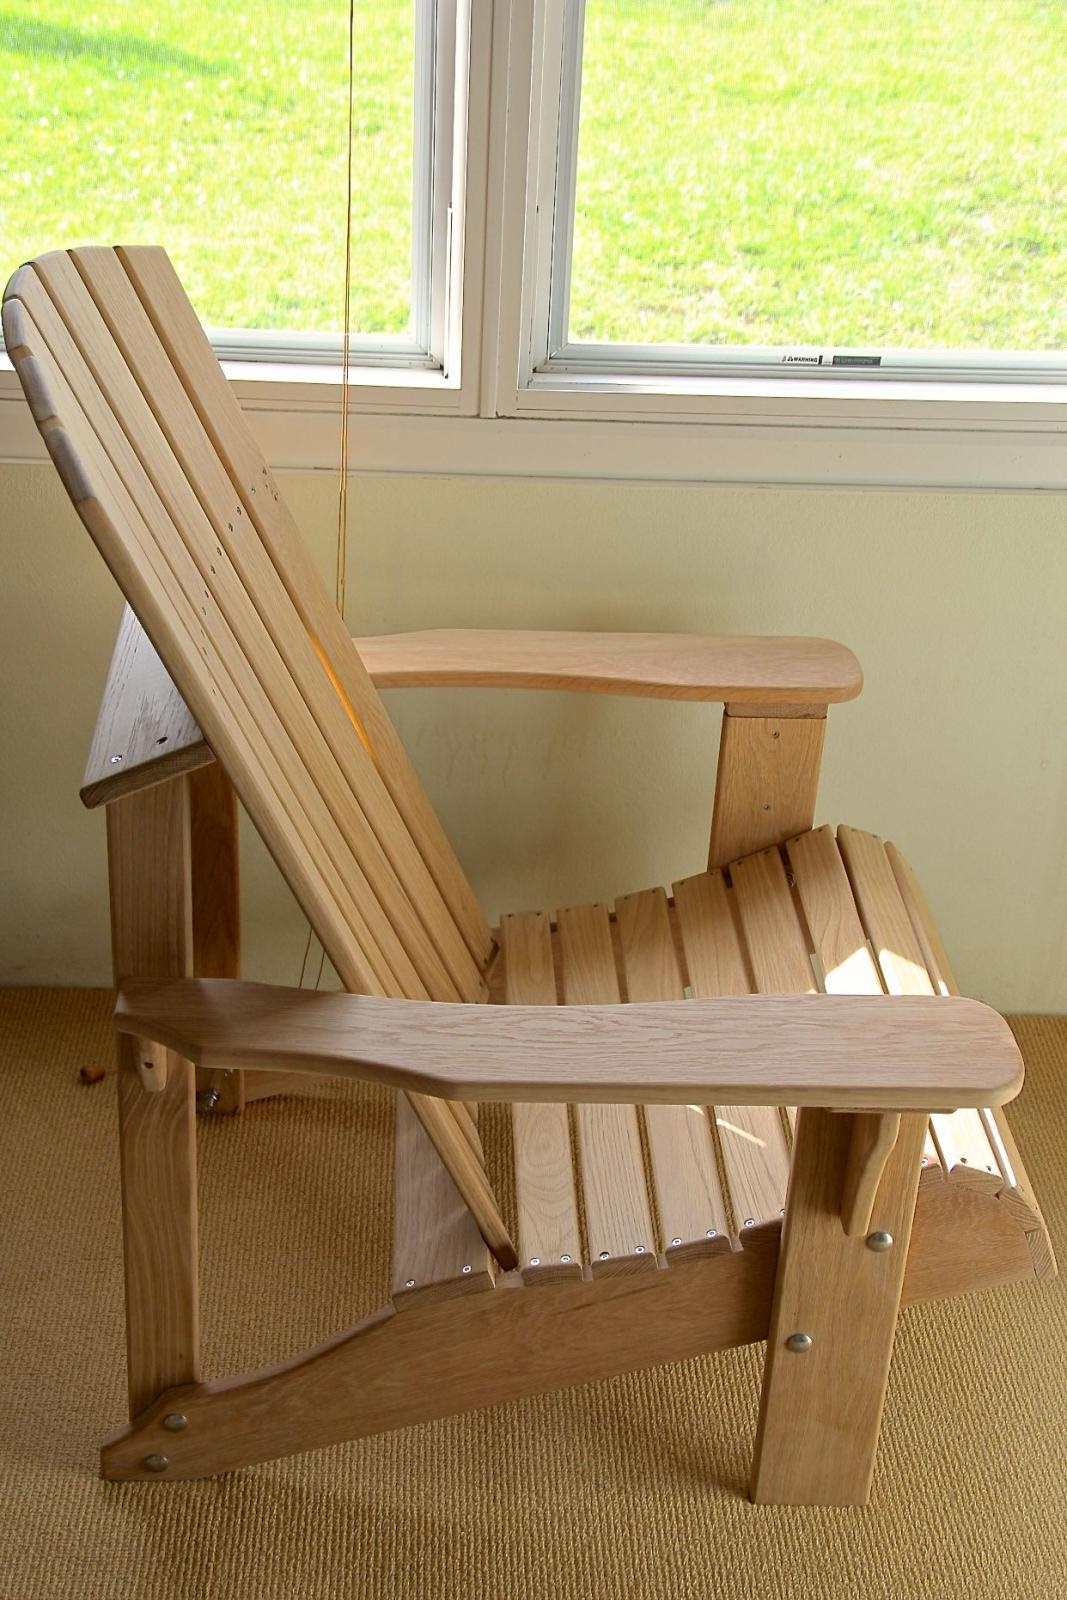 Wood Work Fine Woodworking Adirondack Chair Plans PDF Plans